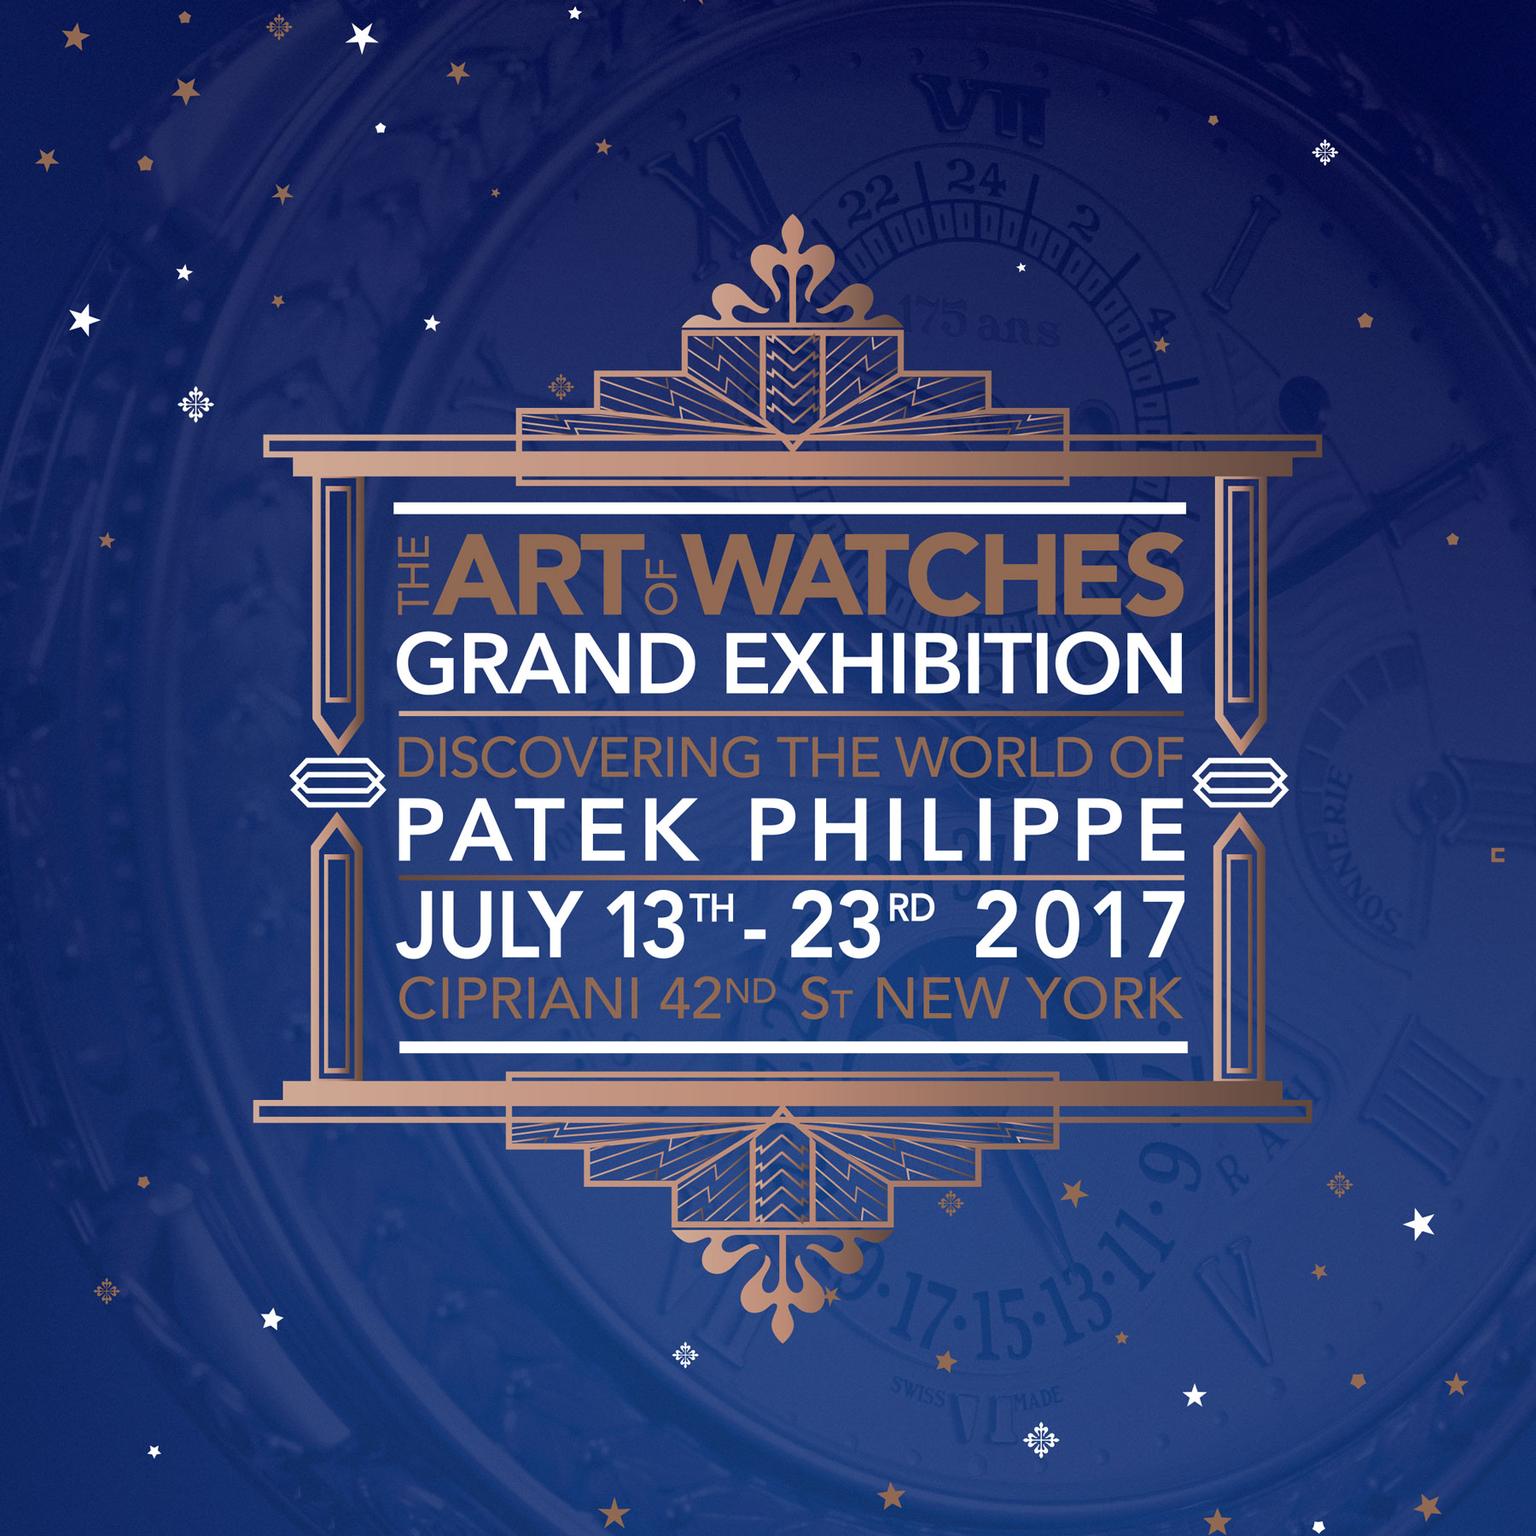 Patek Philippe's Art of Watches Grand Exhibition